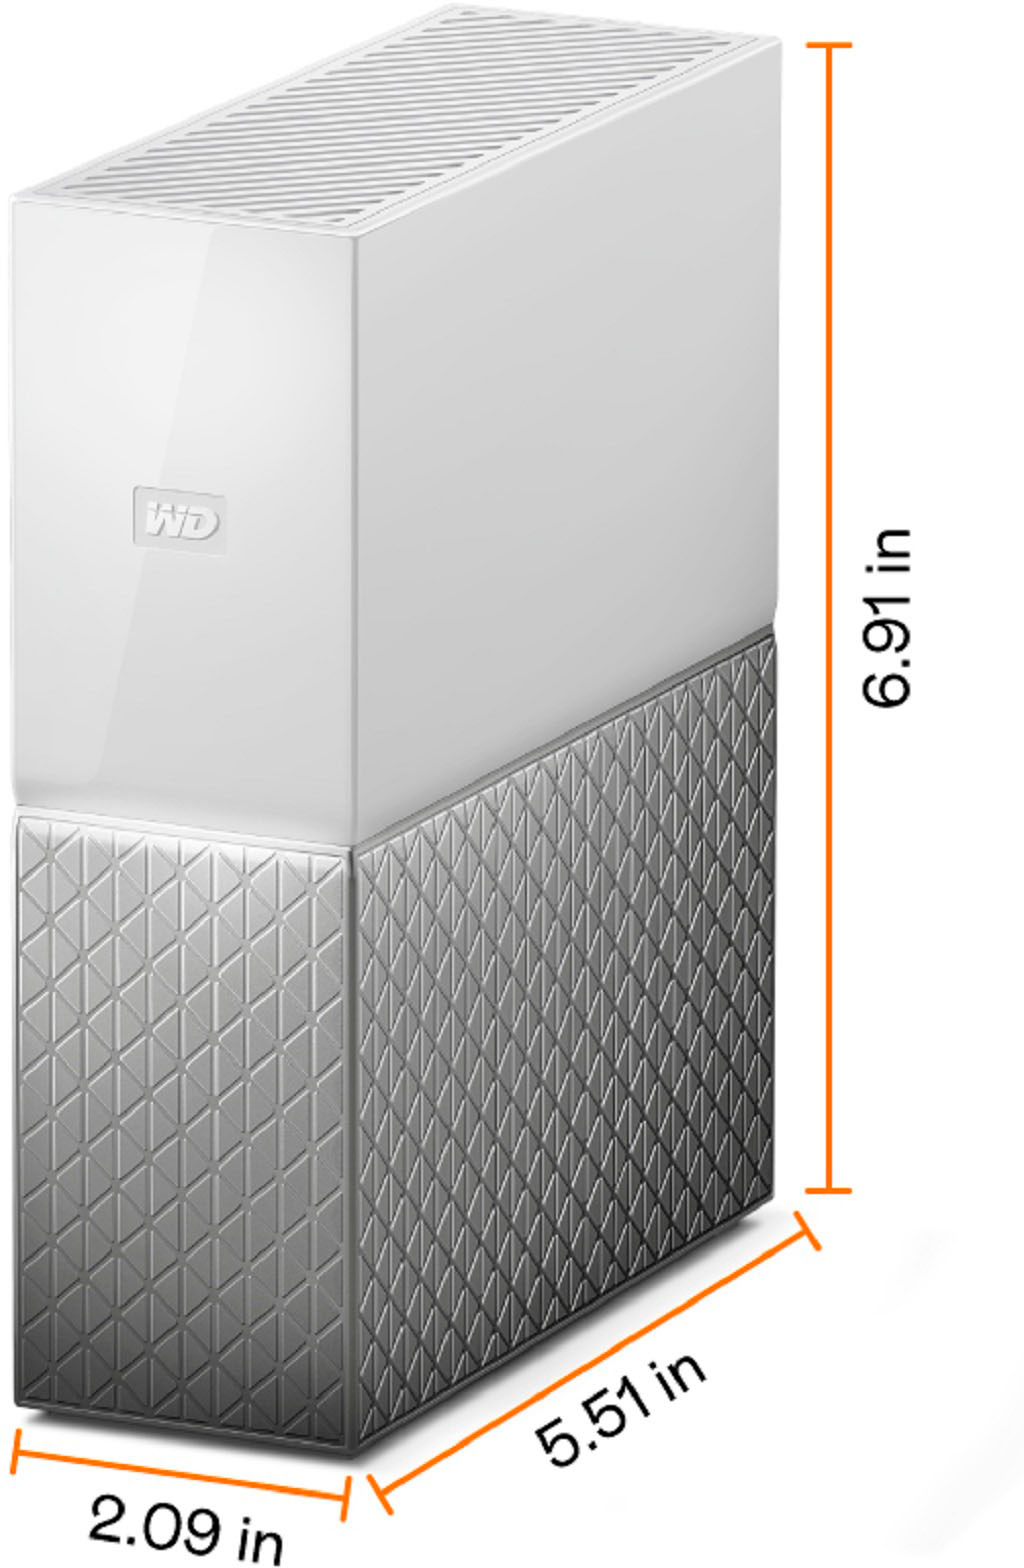 Angle View: WD - Red Plus 8TB Internal SATA NAS Hard Drive for Desktops